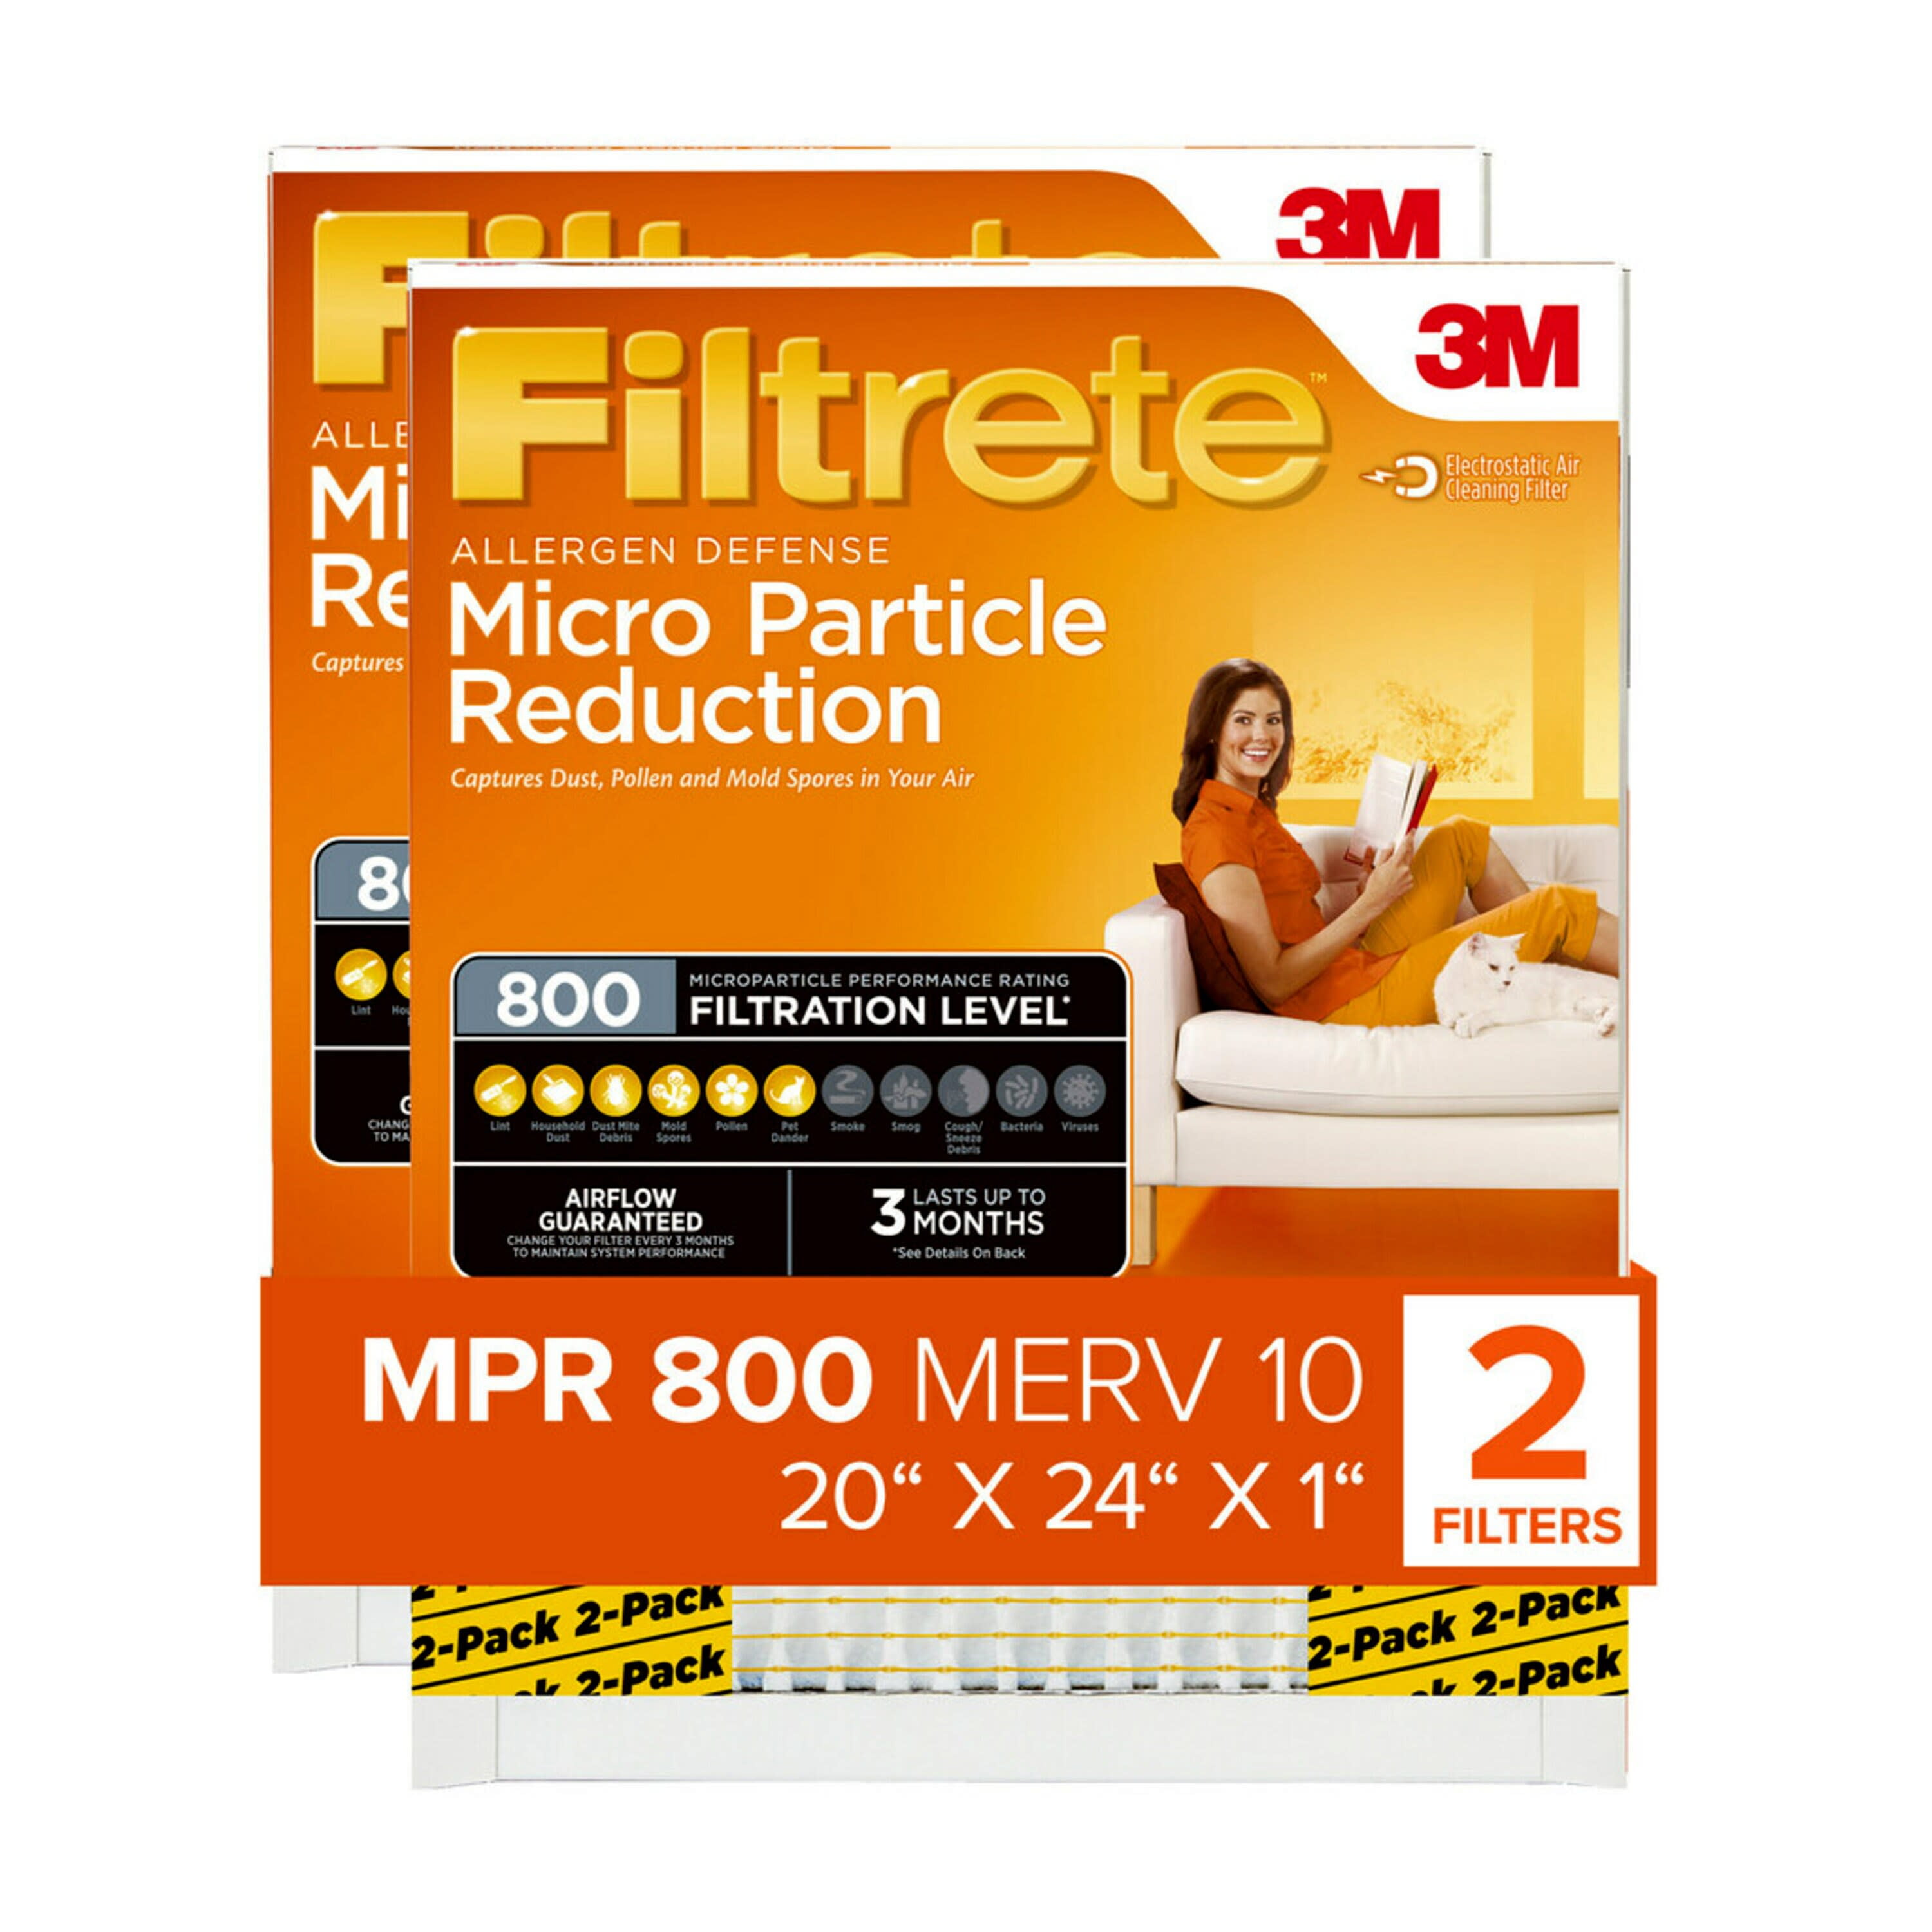 filtrete-by-3m-20x24x1-merv-10-micro-particle-reduction-hvac-furnace